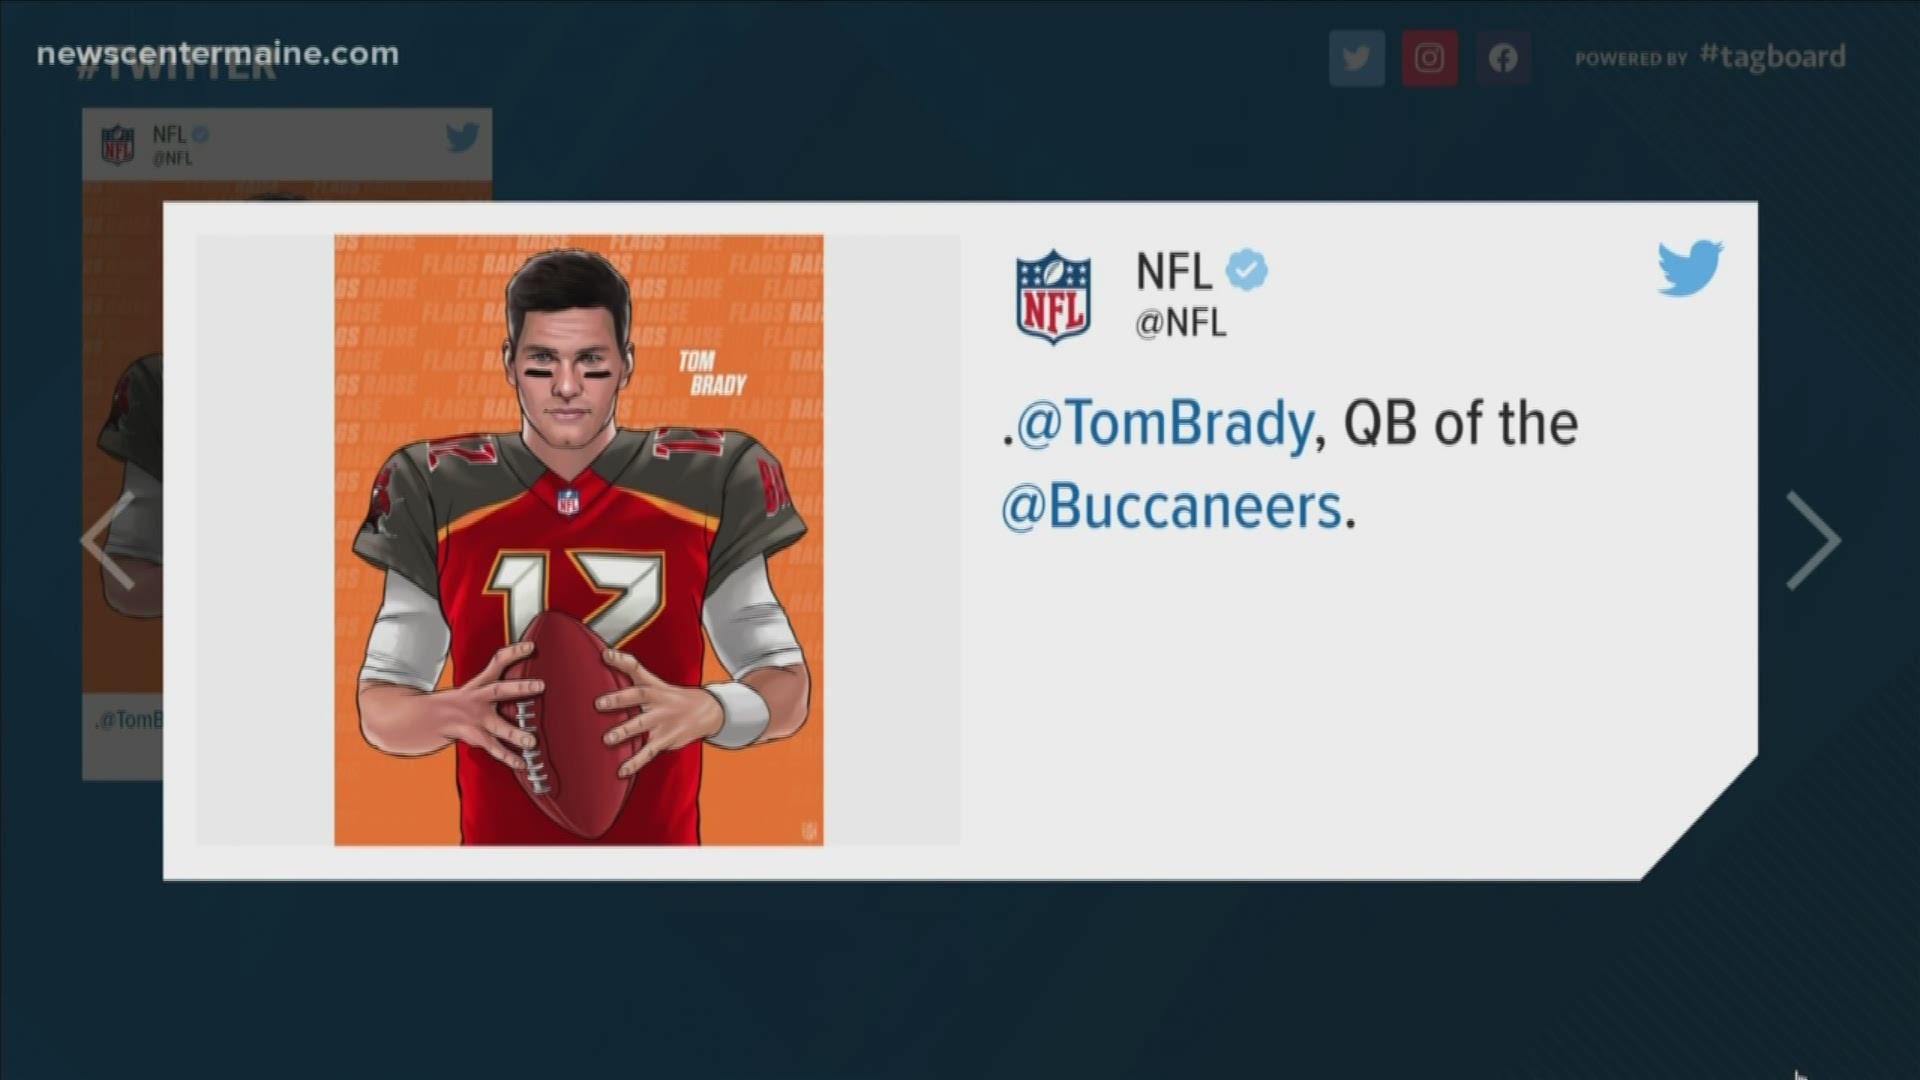 NFL, The Rap Sheet Twitter accounts tease Brady joining Tampa Bay